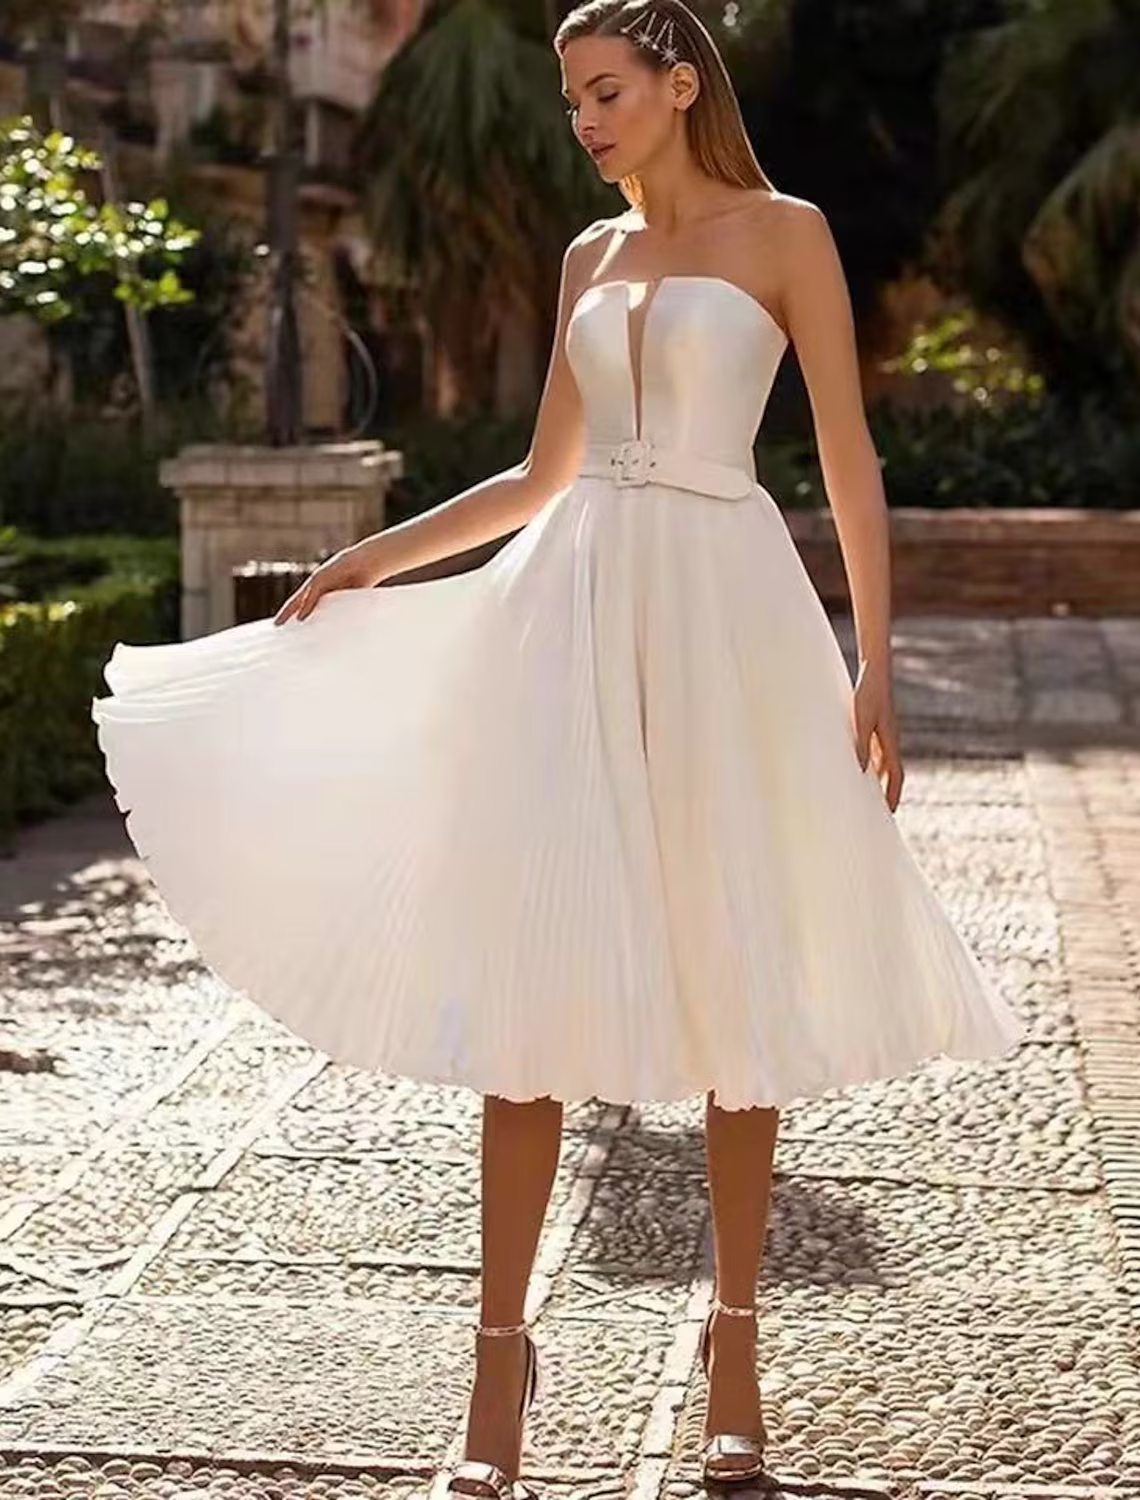 Bridal Shower Little White Dresses Wedding Dresses Tea Length A-Line Sleeveless Strapless Satin With